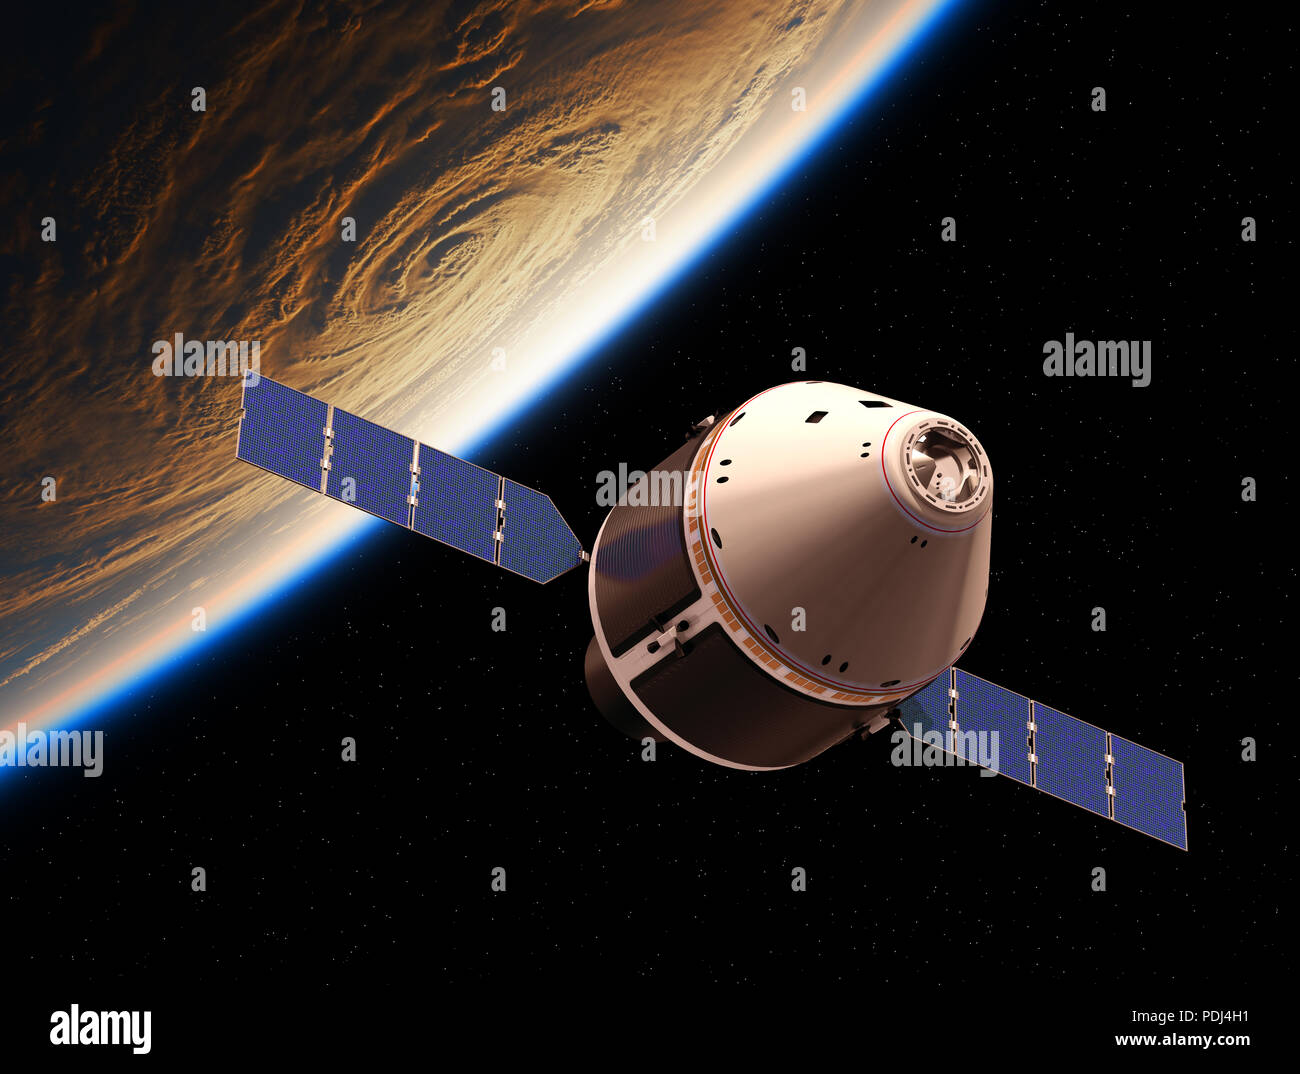 Crew Exploration Vehicle Orbiting Planet Earth. 3D Illustration. Stock Photo